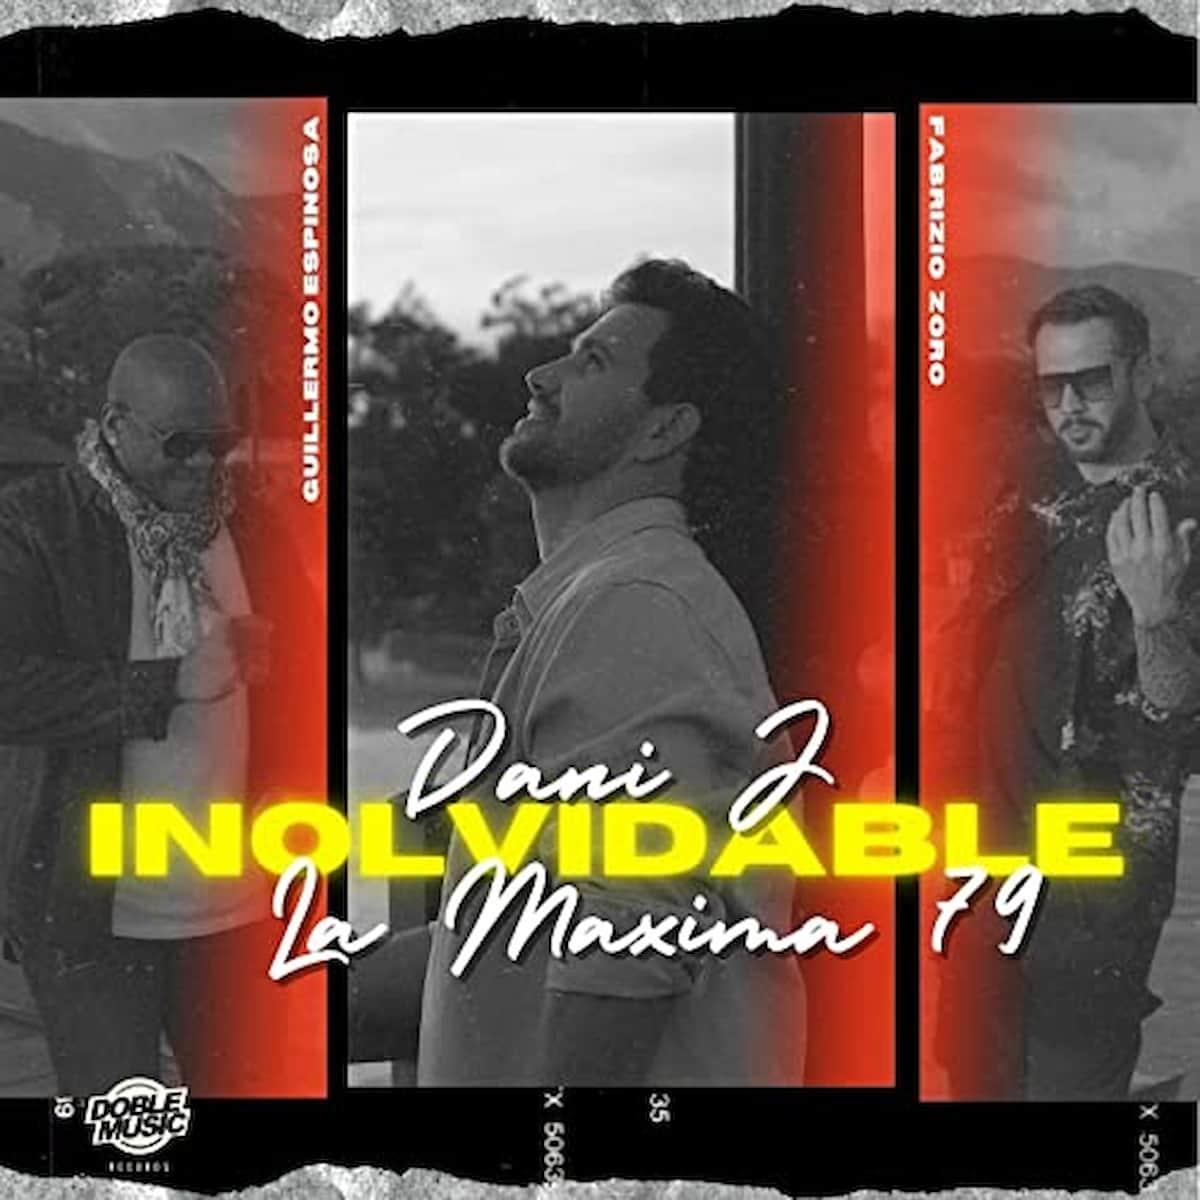 Salsa-Song "Inolvidable" - Dani J, La Maxima 79